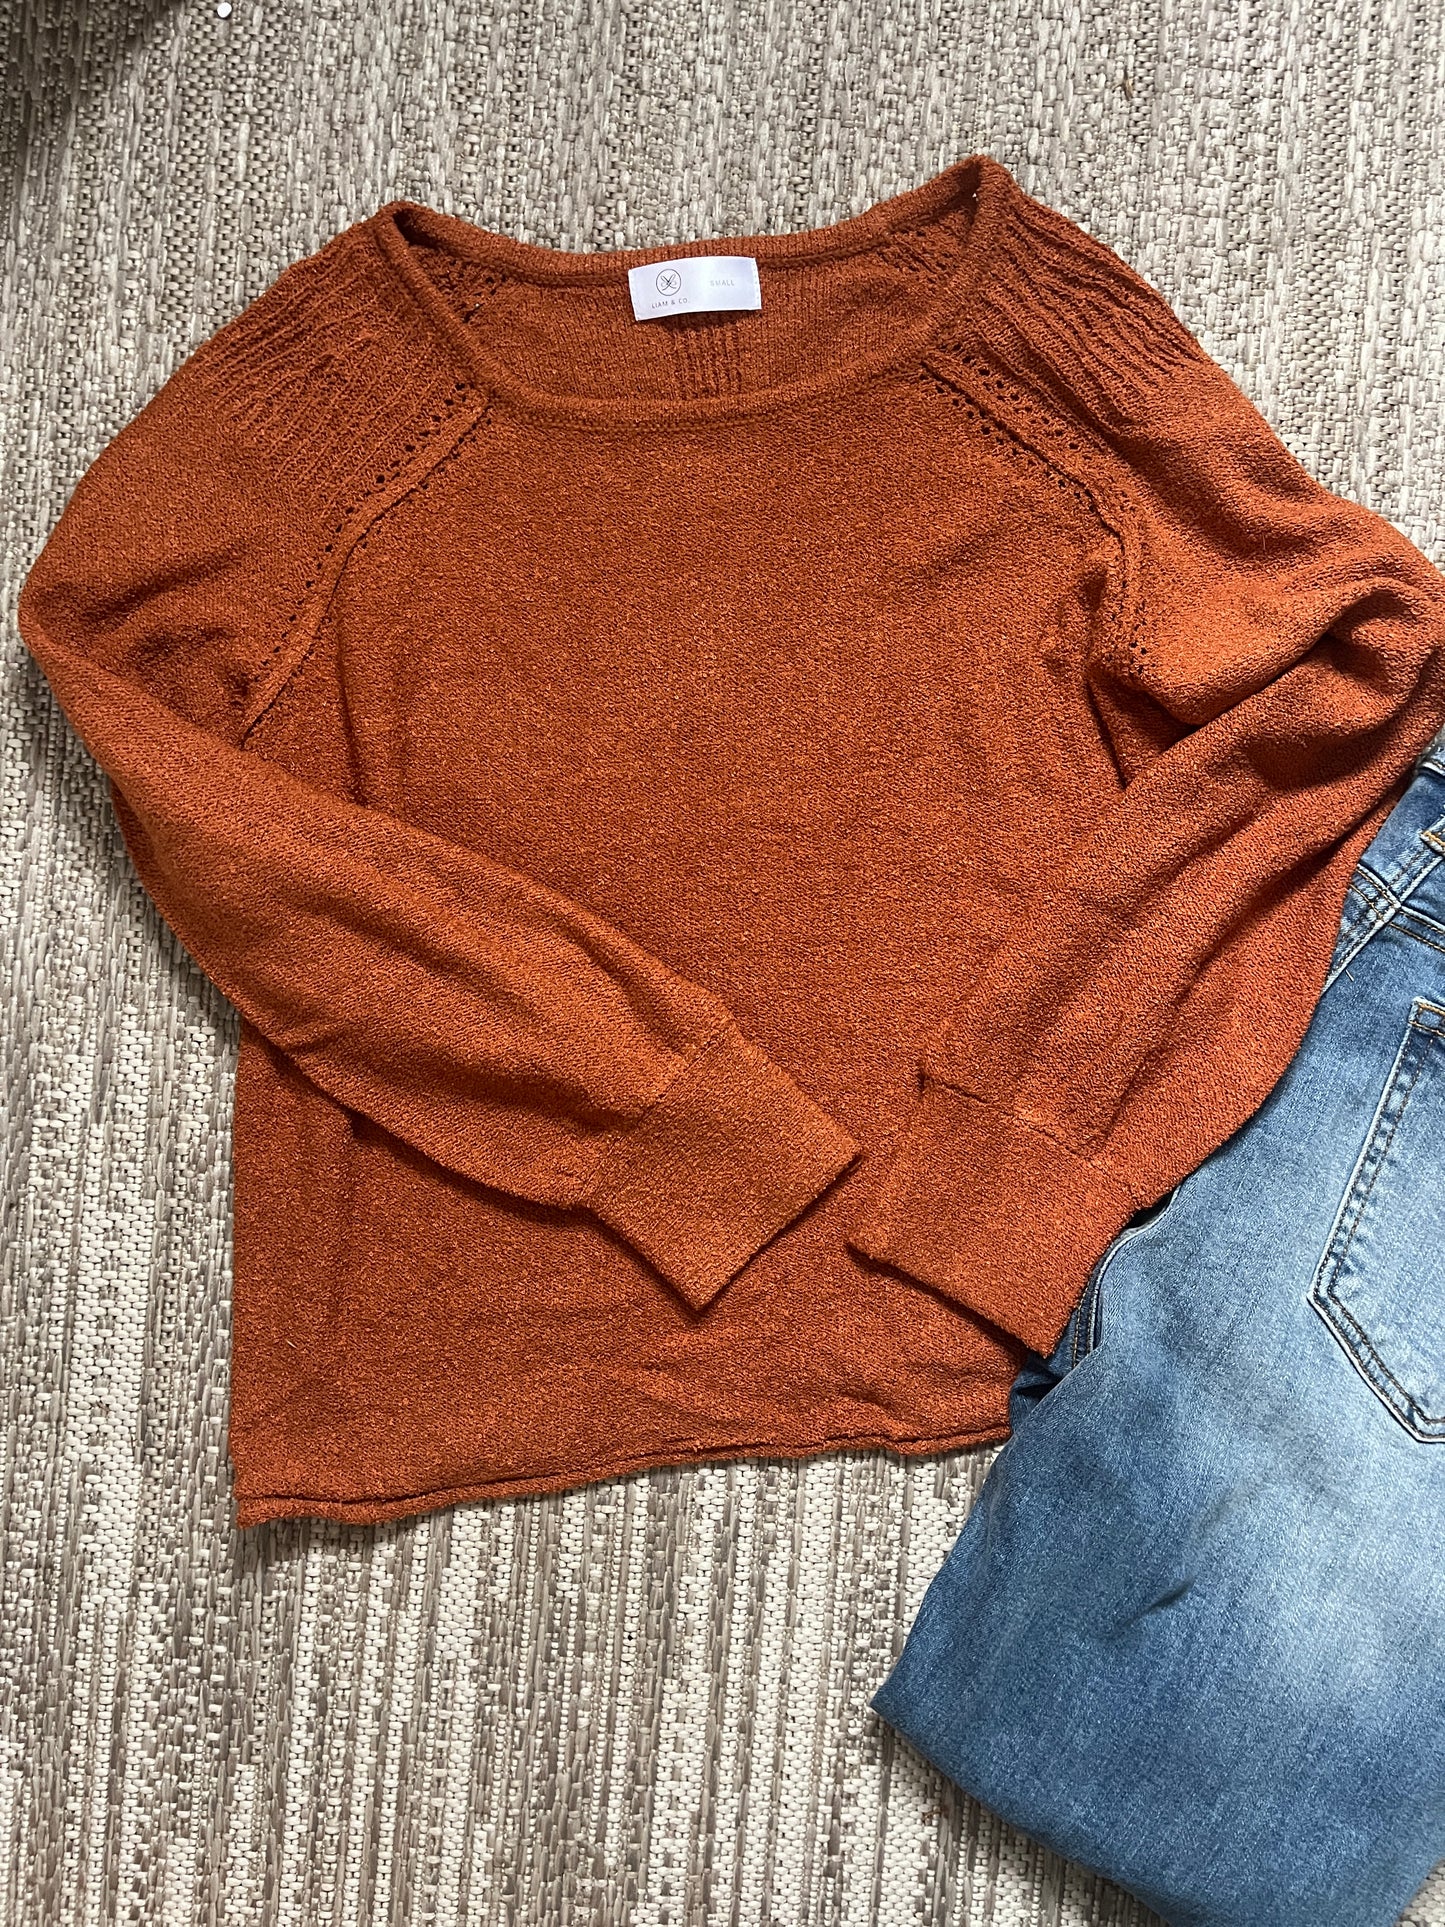 Burnt orange sweater